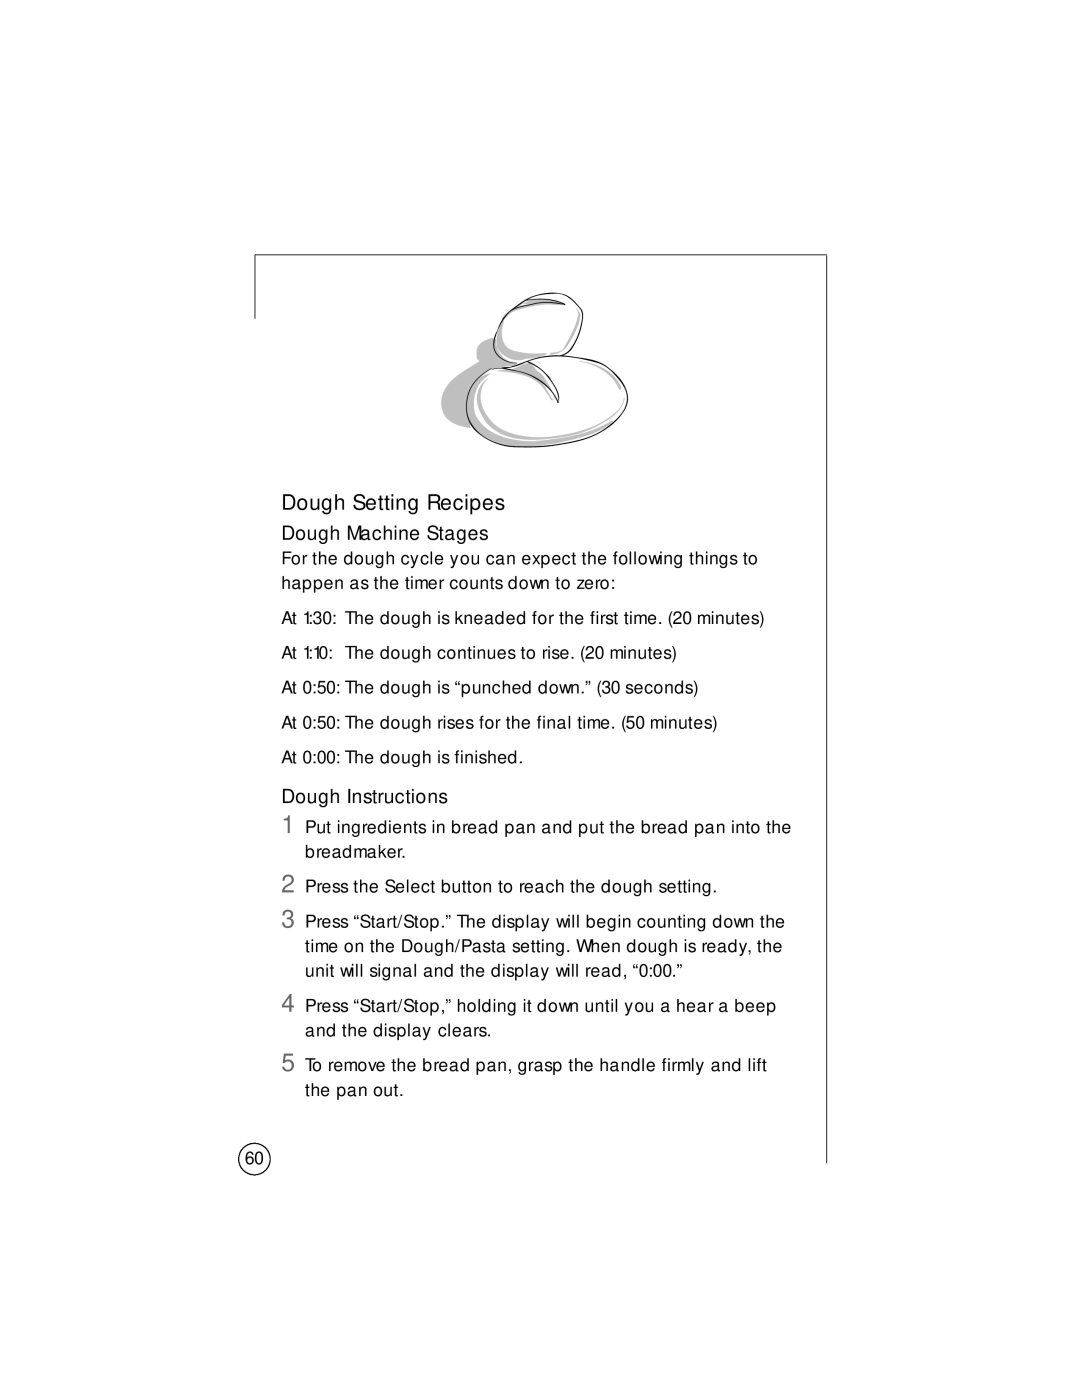 Sunbeam 5834, 102817 user manual Dough Setting Recipes, Dough Machine Stages, Dough Instructions 